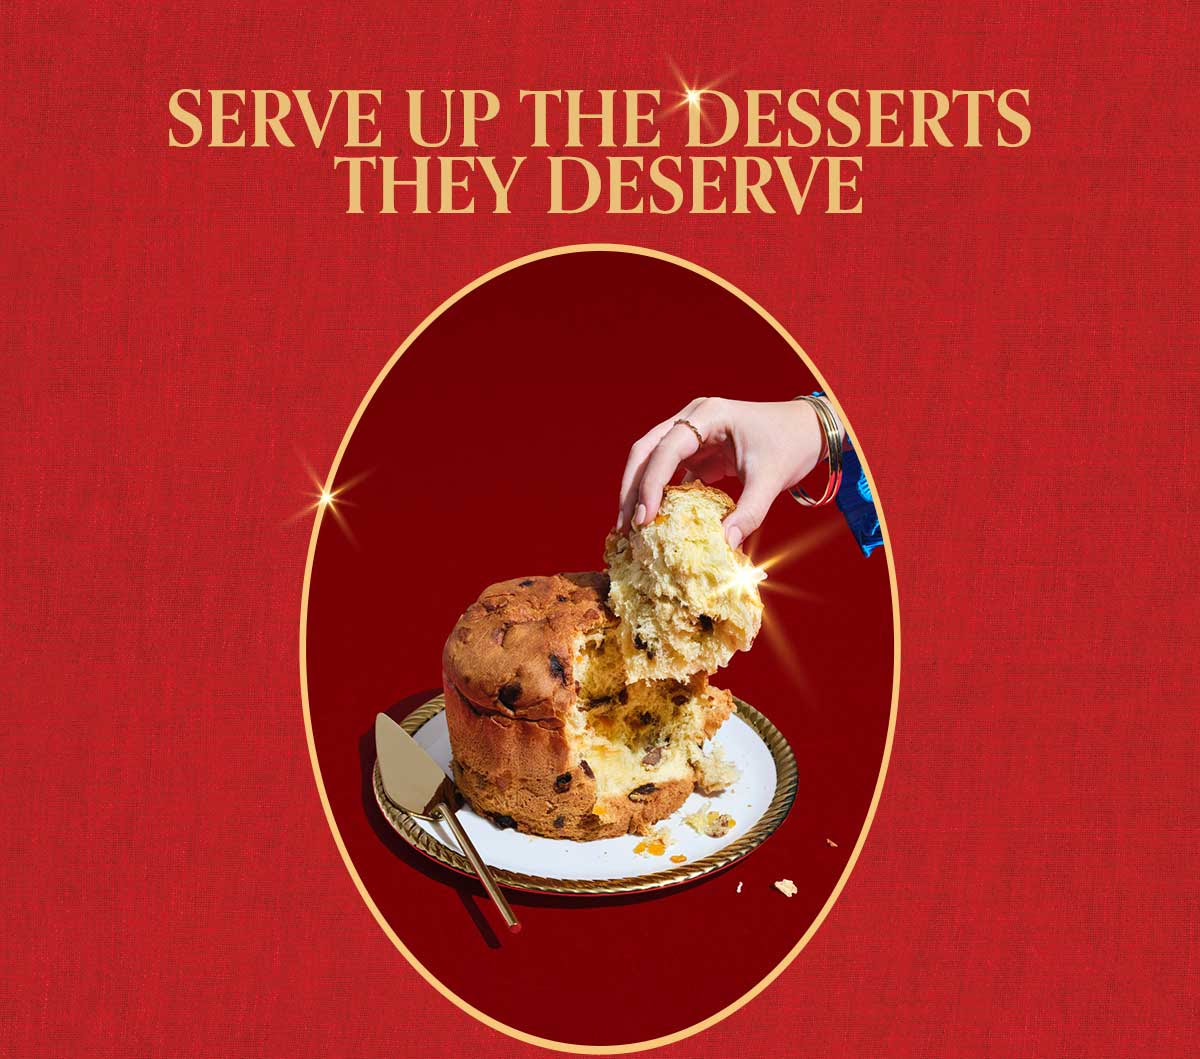 Serve up the desserts they deserve